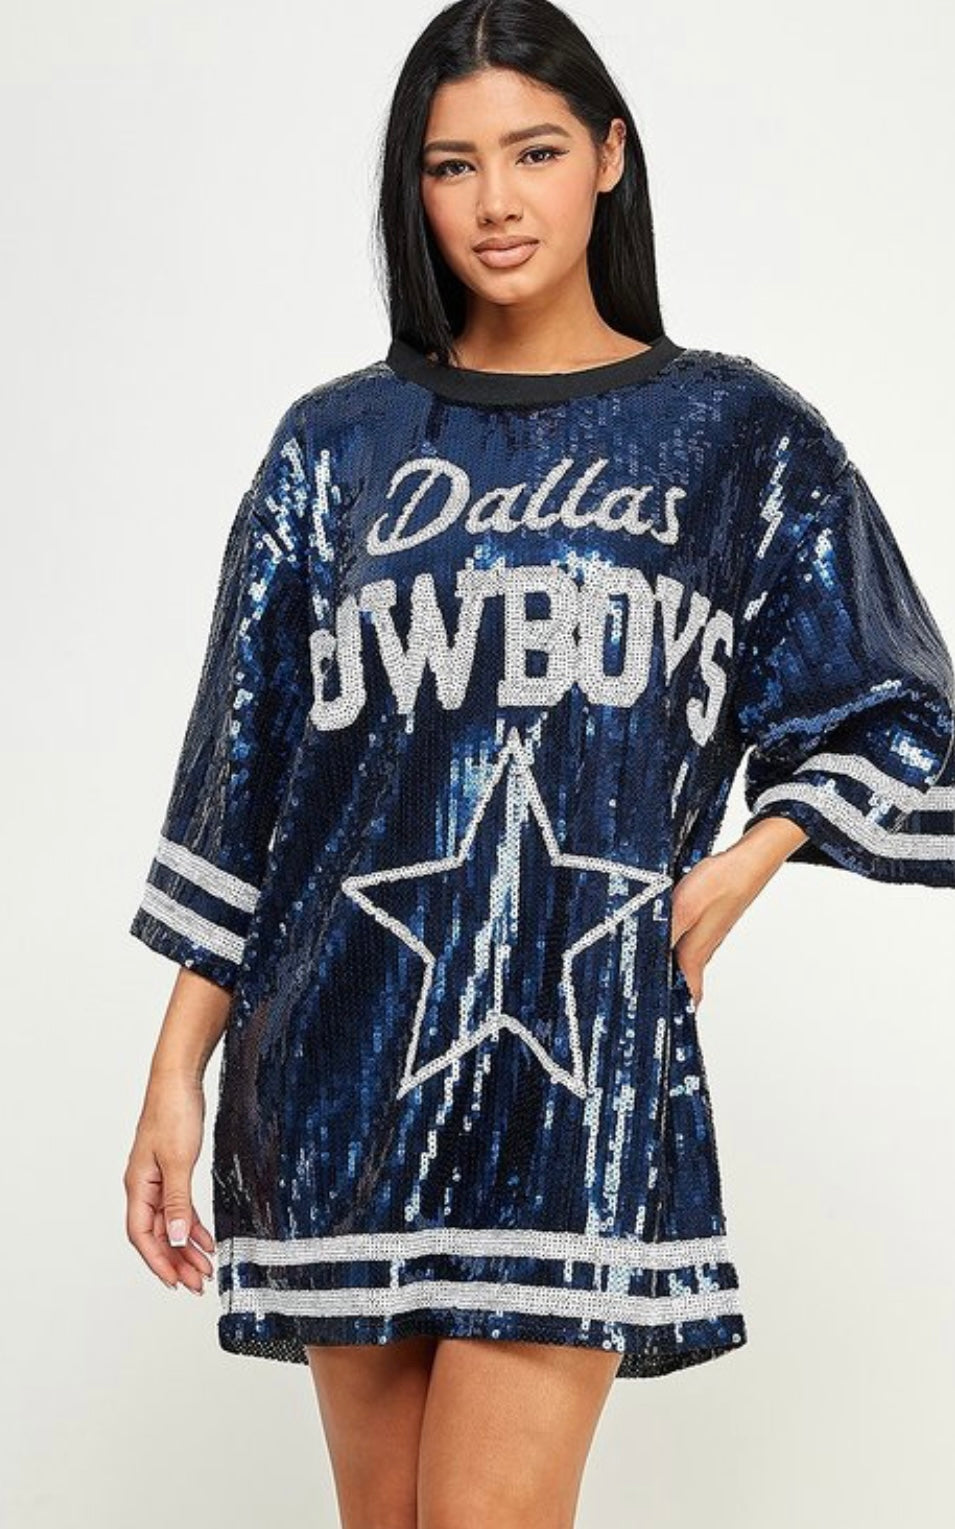 We Dem Boyz Dallas Sequins Jersey Dress/Top